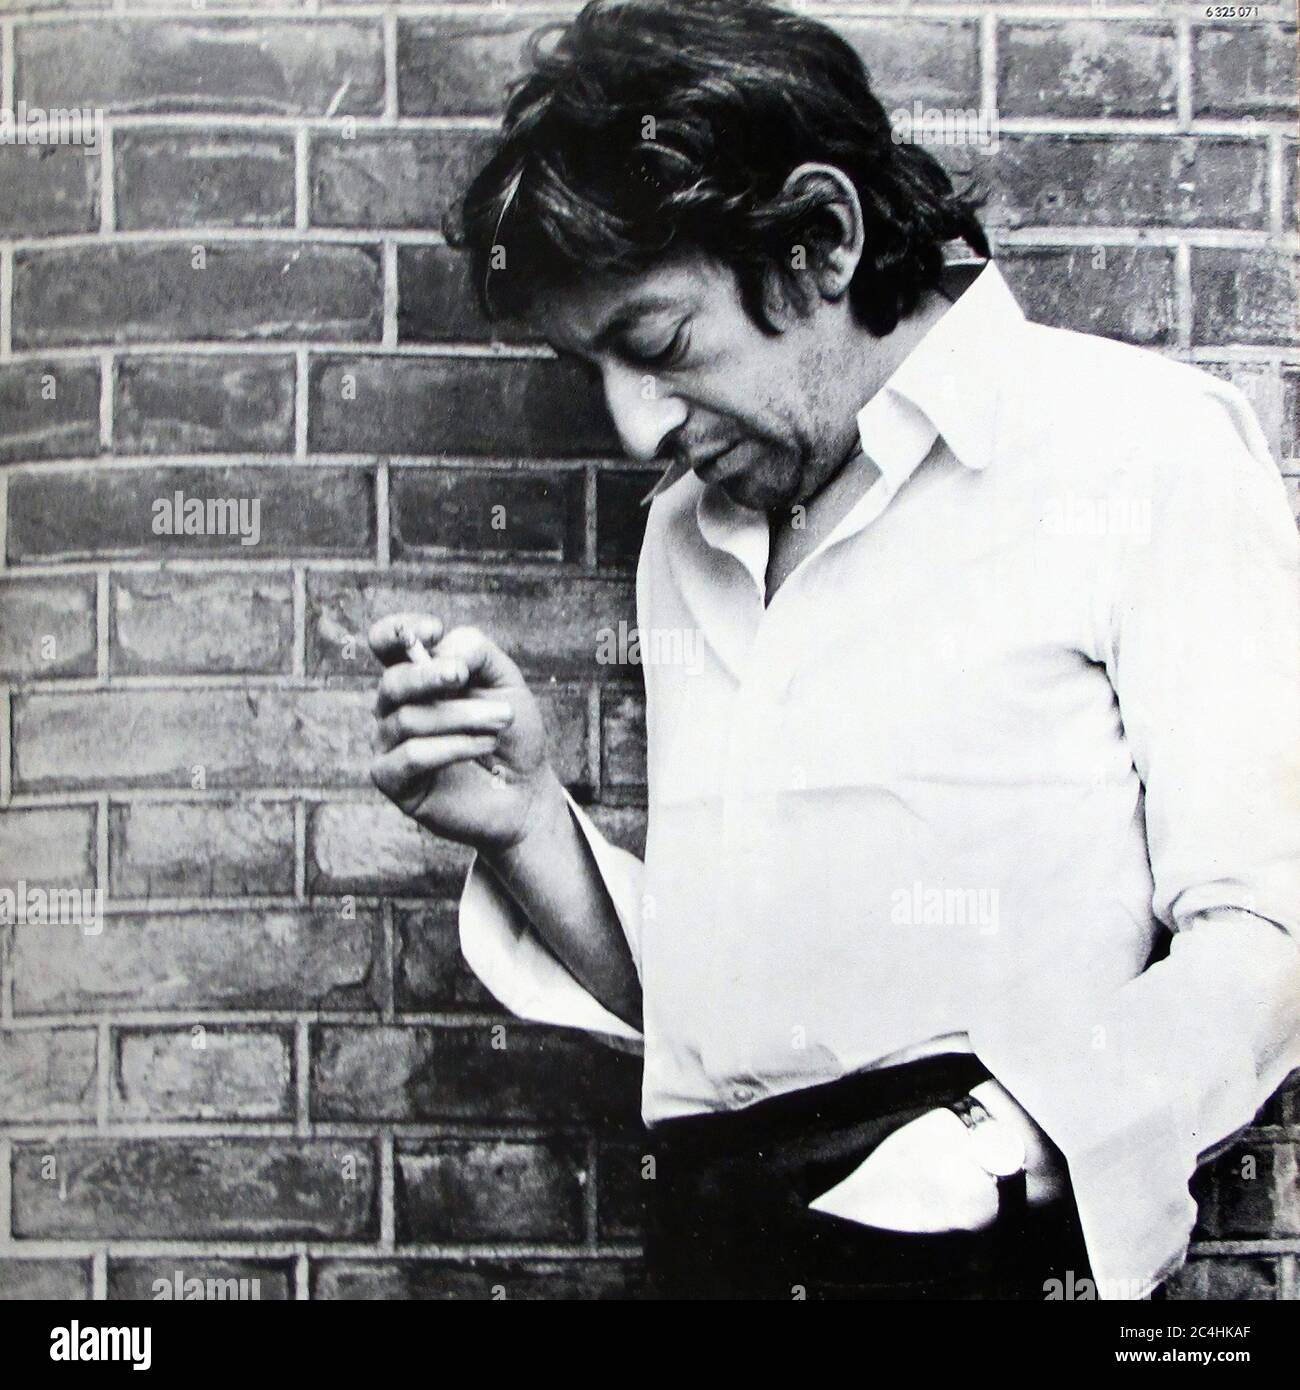 Serge Gainsbourg Histoire De Melody Nelson Album Cover 12'' Lp Vinyl -  Vintage Record Cover 02 Stock Photo - Alamy